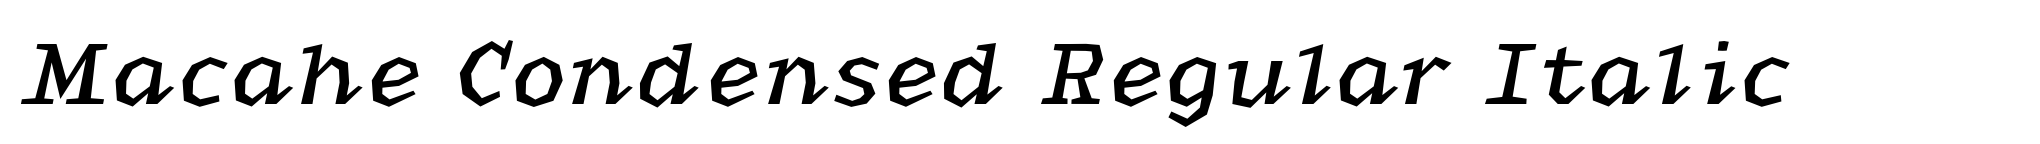 Macahe Condensed Regular Italic image